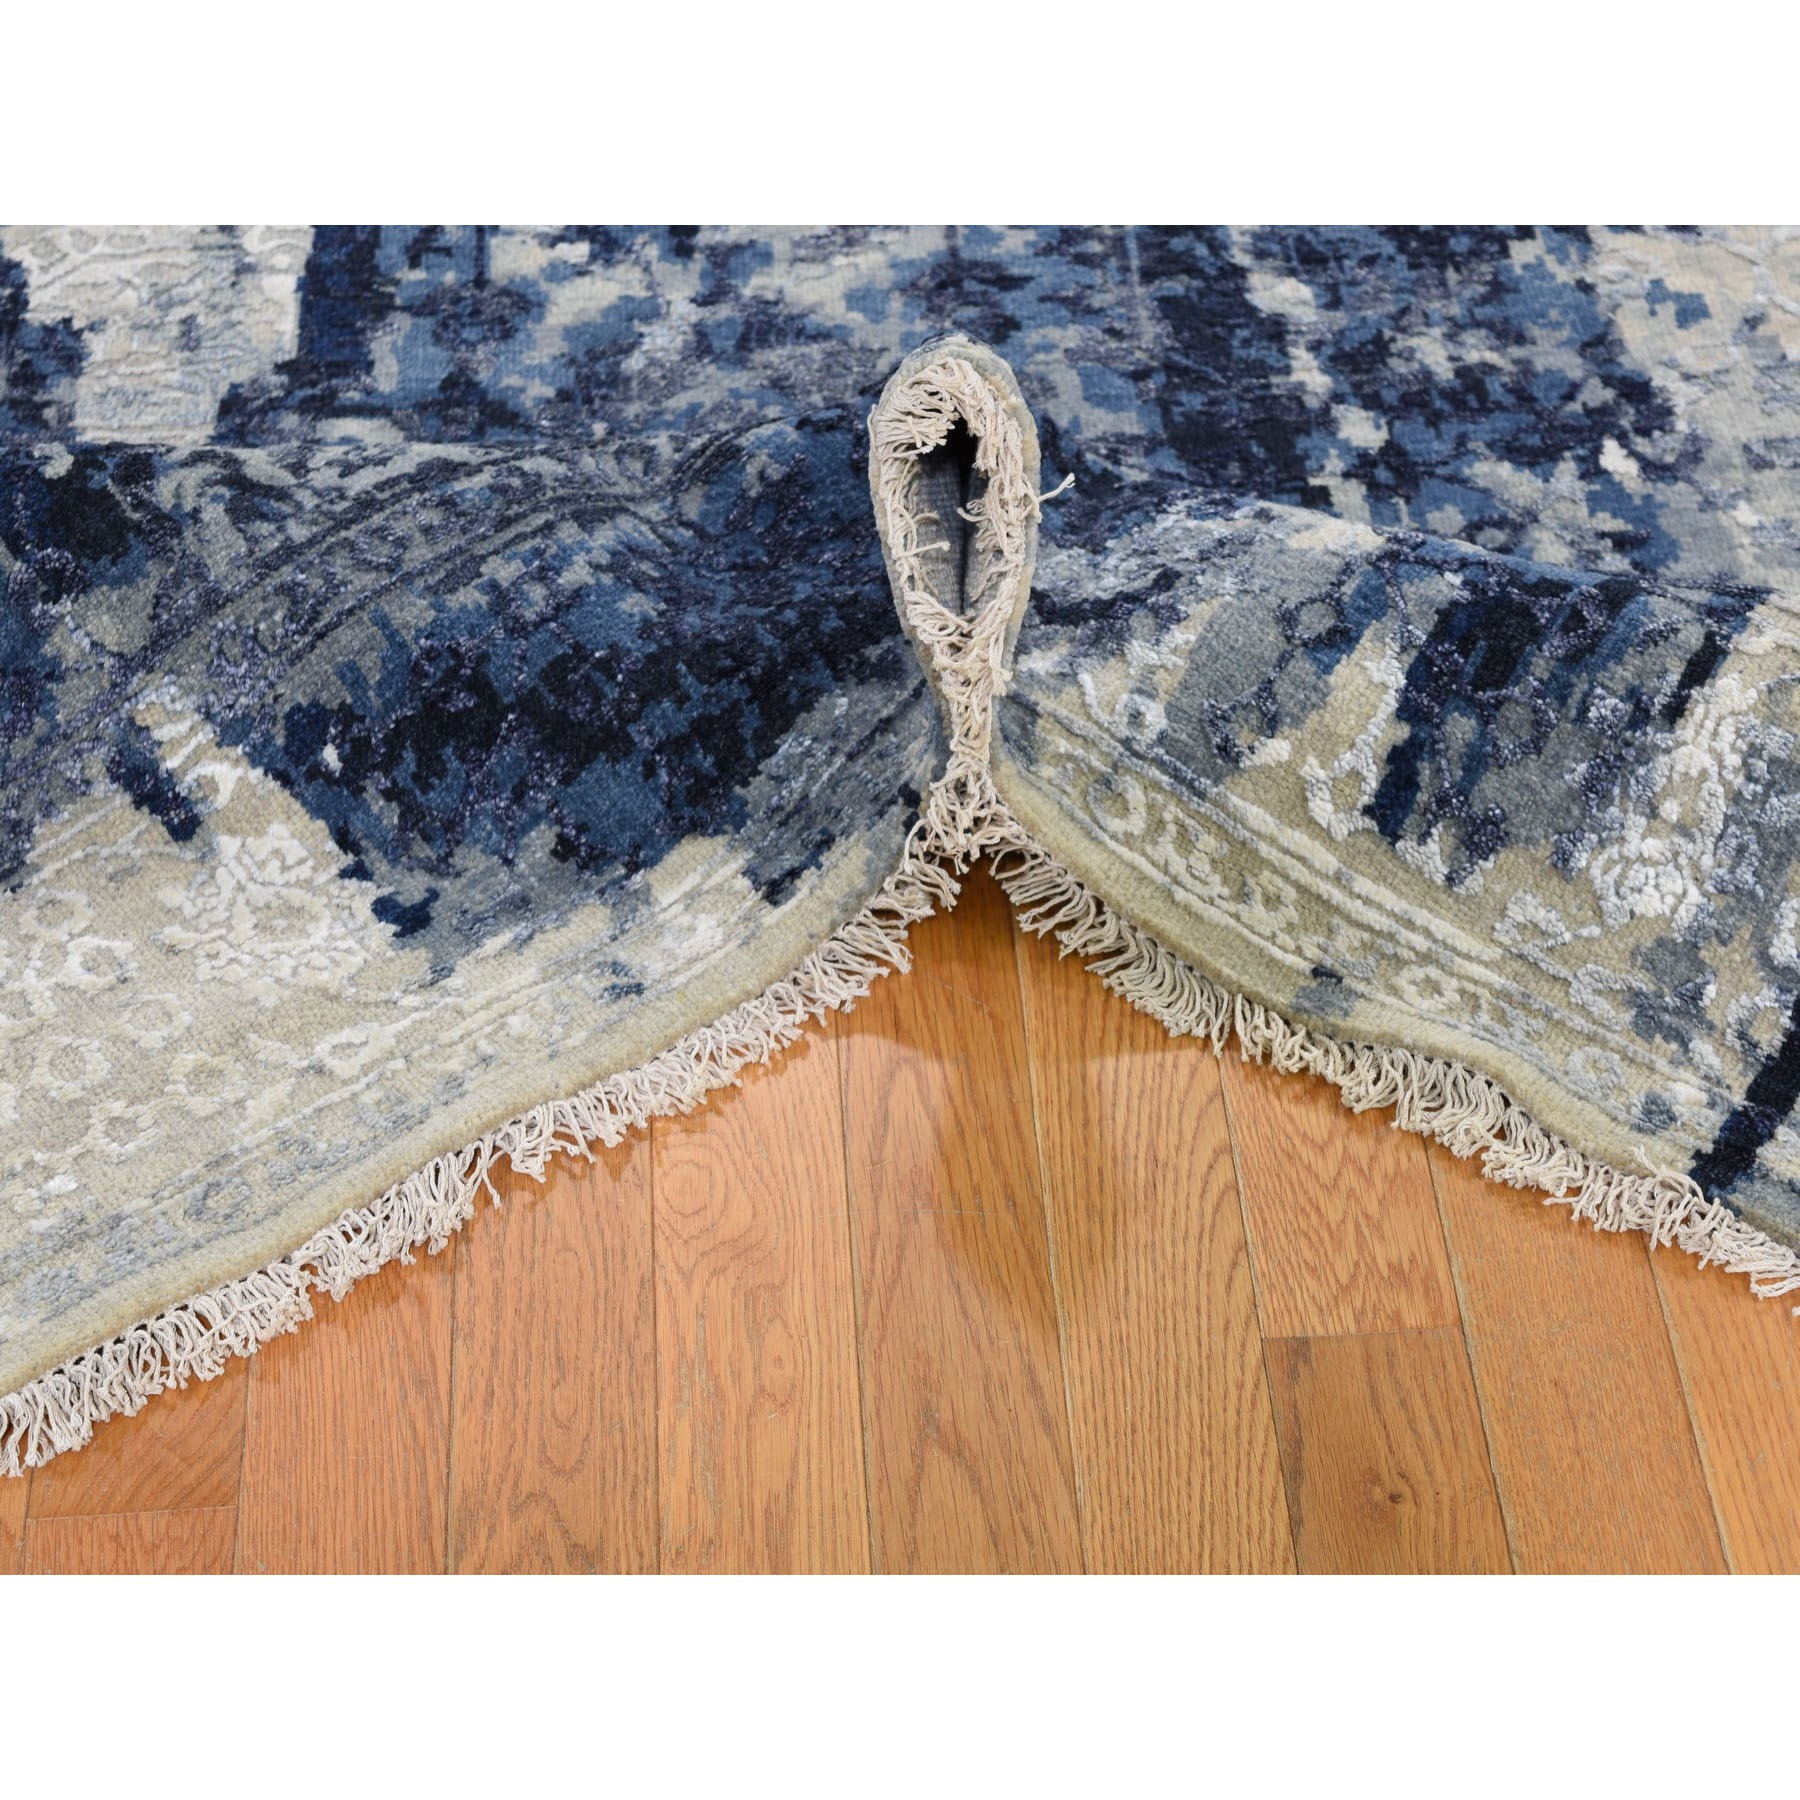 6-x8-10  Wool And Silk Shibori Design Tone On Tone Hand Knotted Oriental Rug 